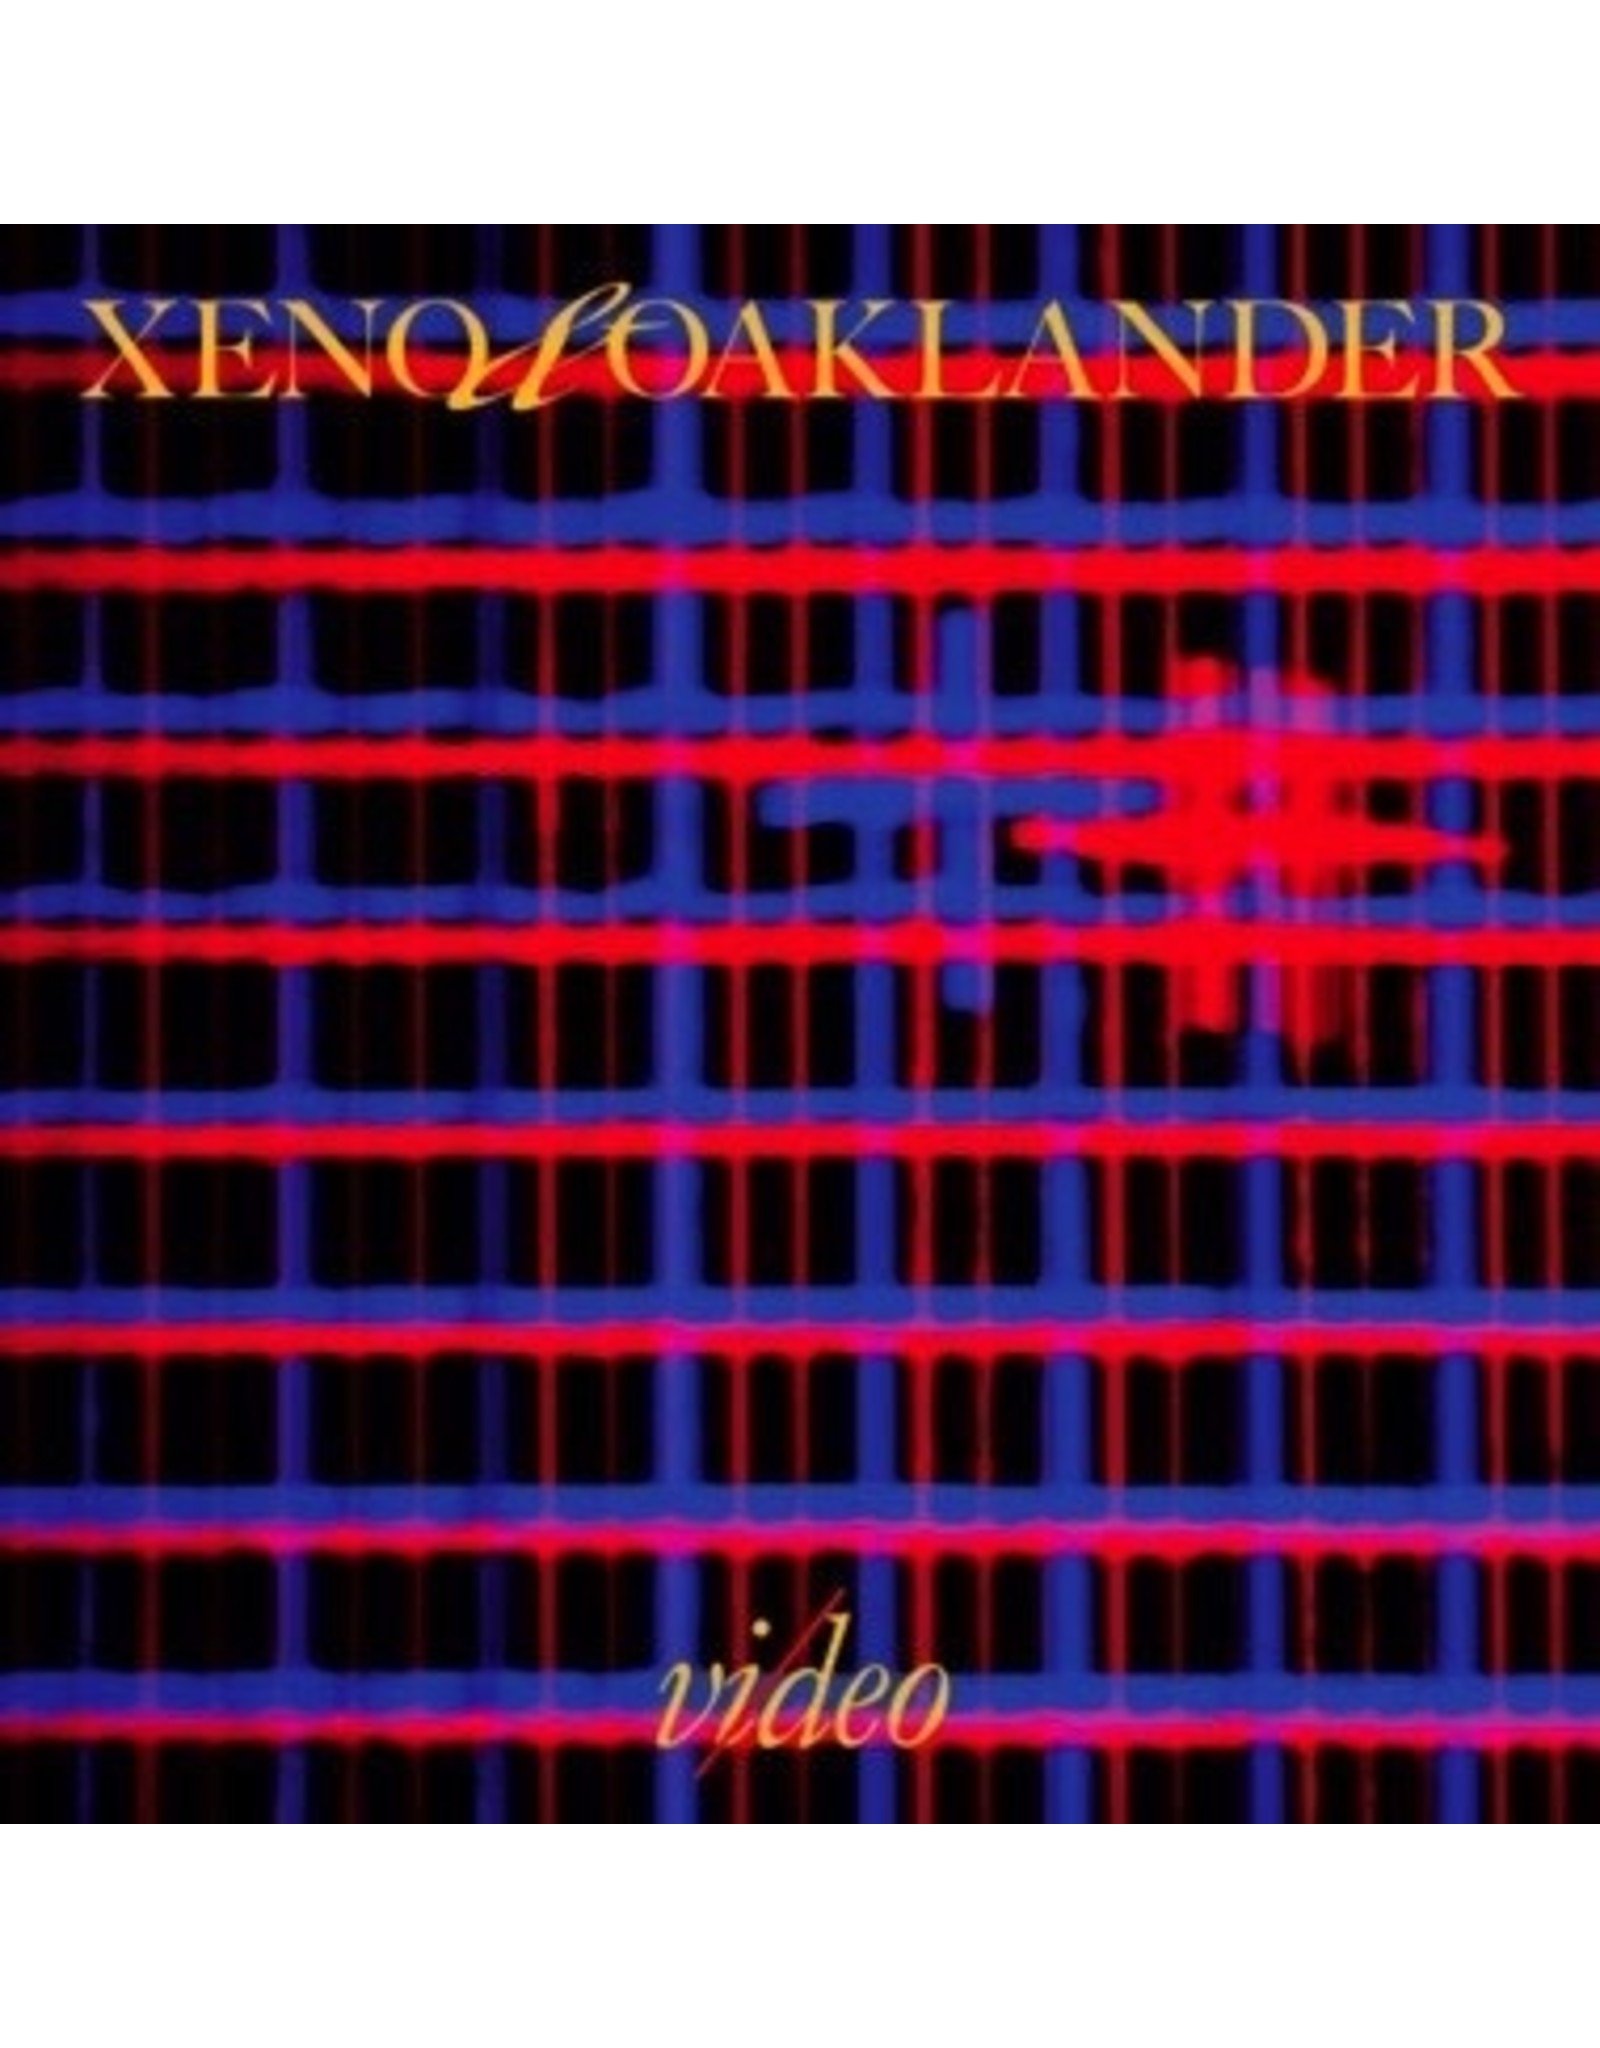 New Vinyl Xeno & Oaklander -Vi/deo (Green) LP